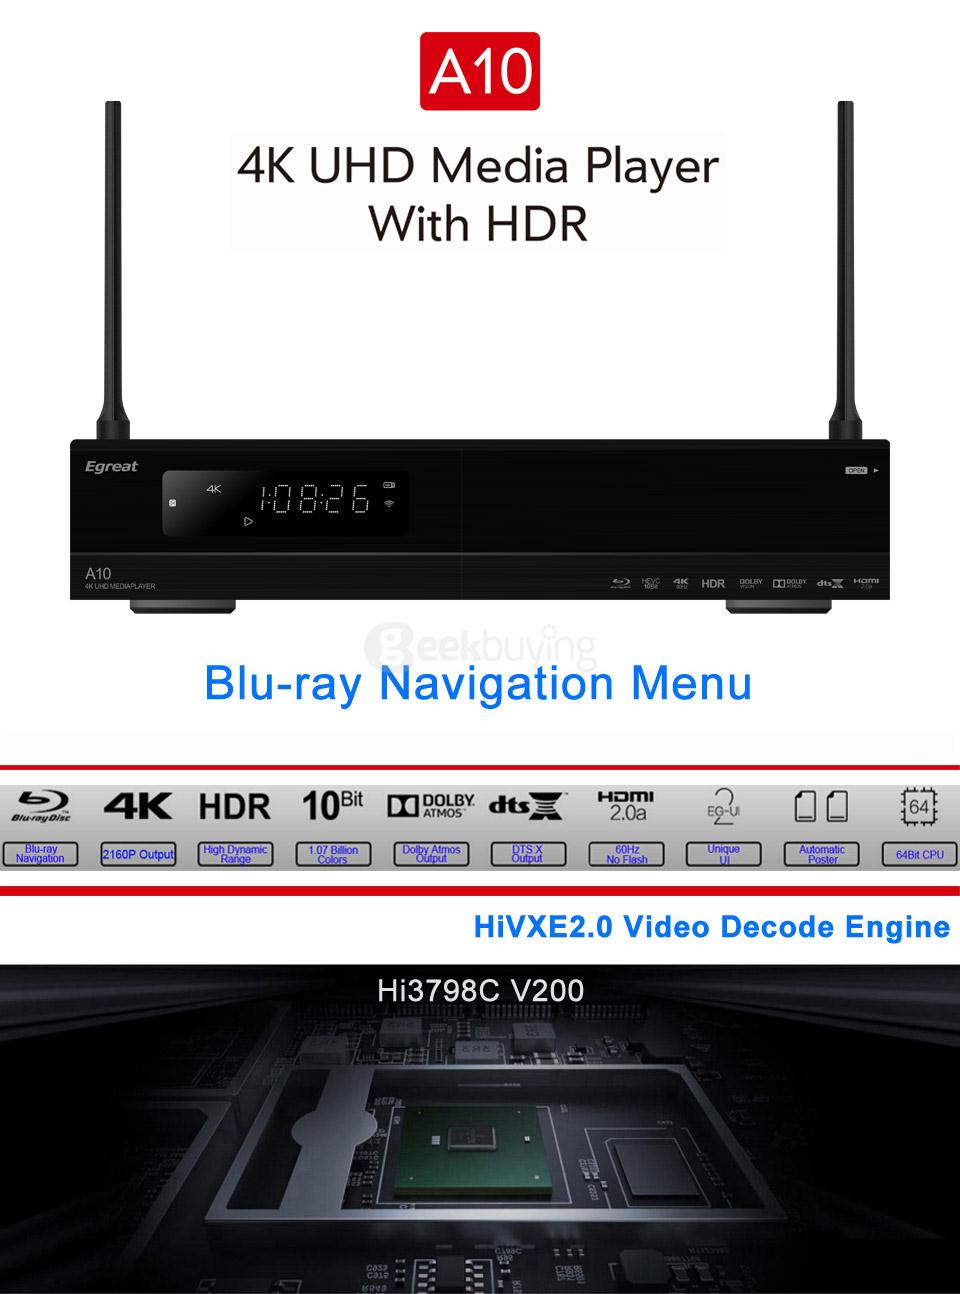 Android TV Box EGreat a10 cao cấp - xem phim 4K HDR, phim 3D, phim BLu-ray thả ga